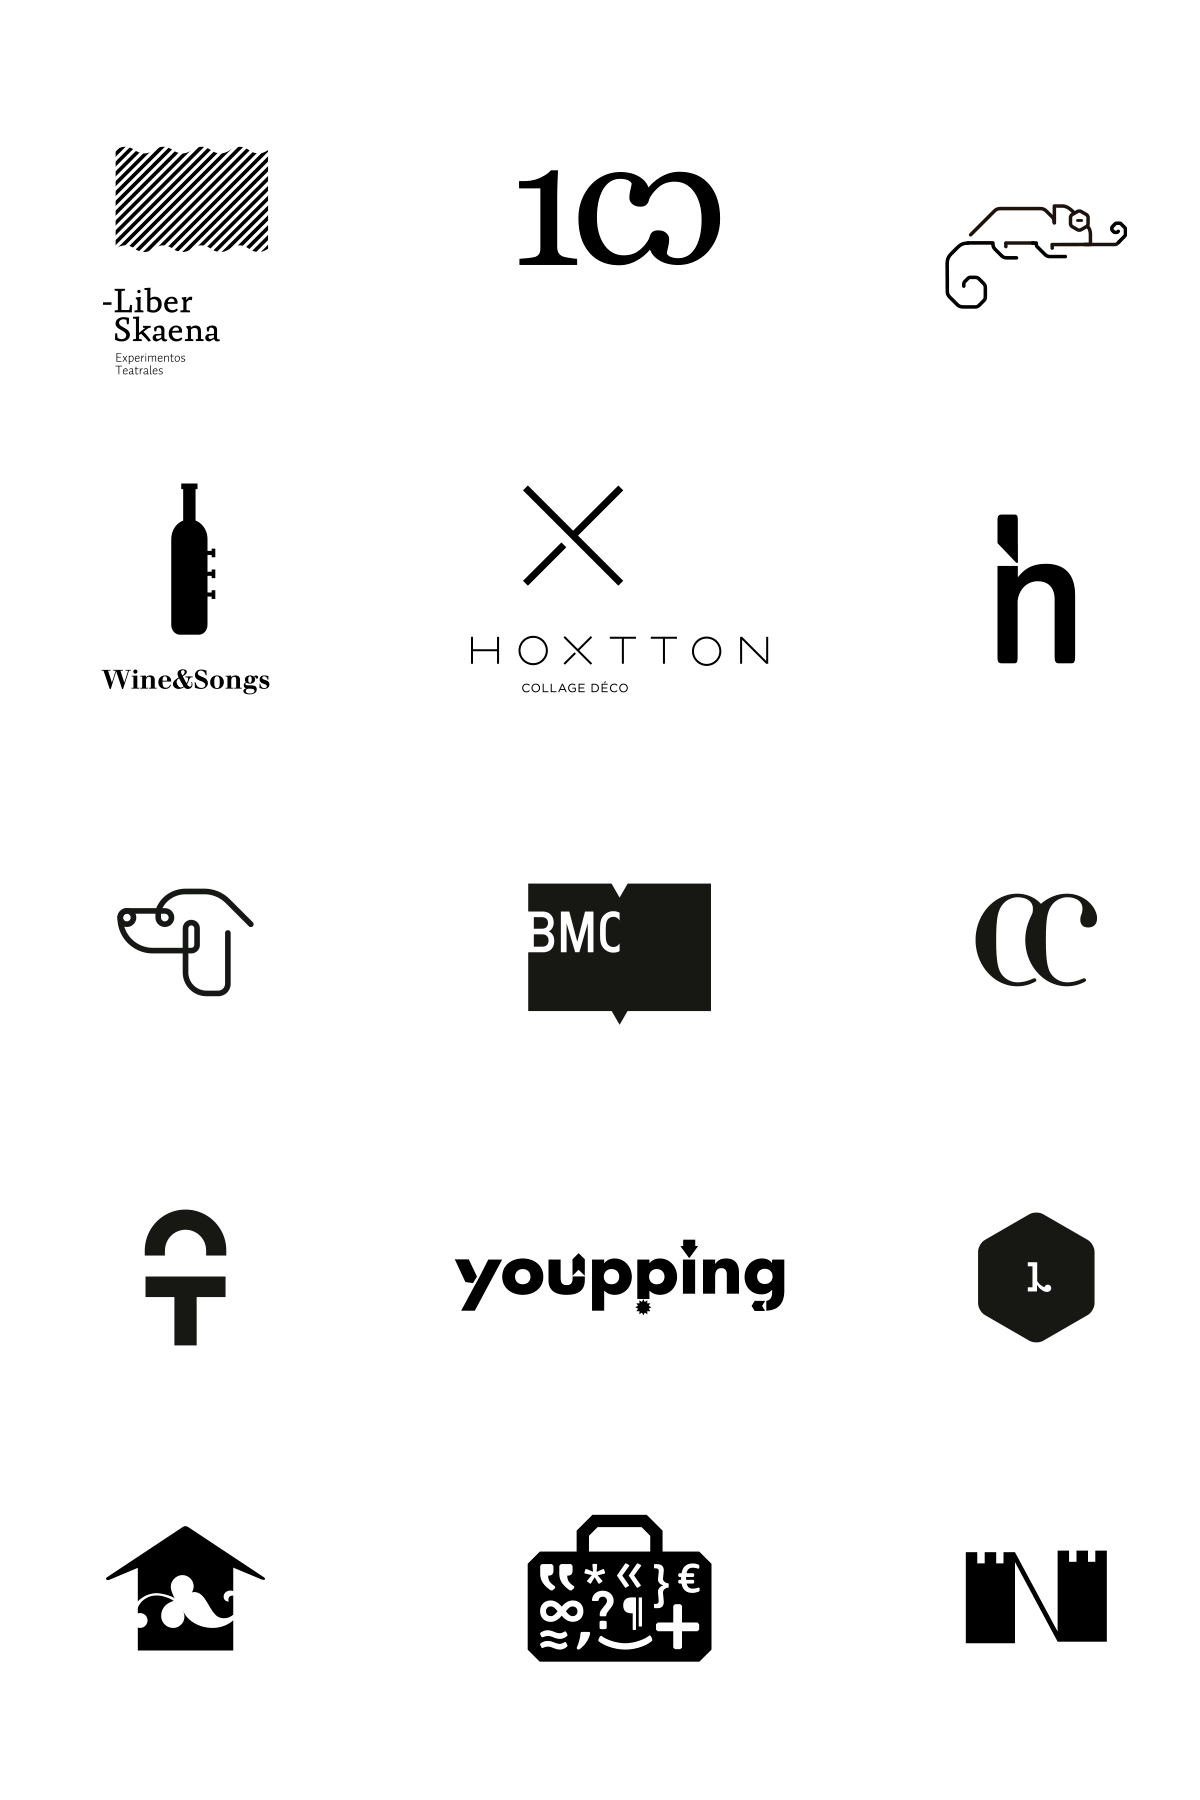 logos and symbols